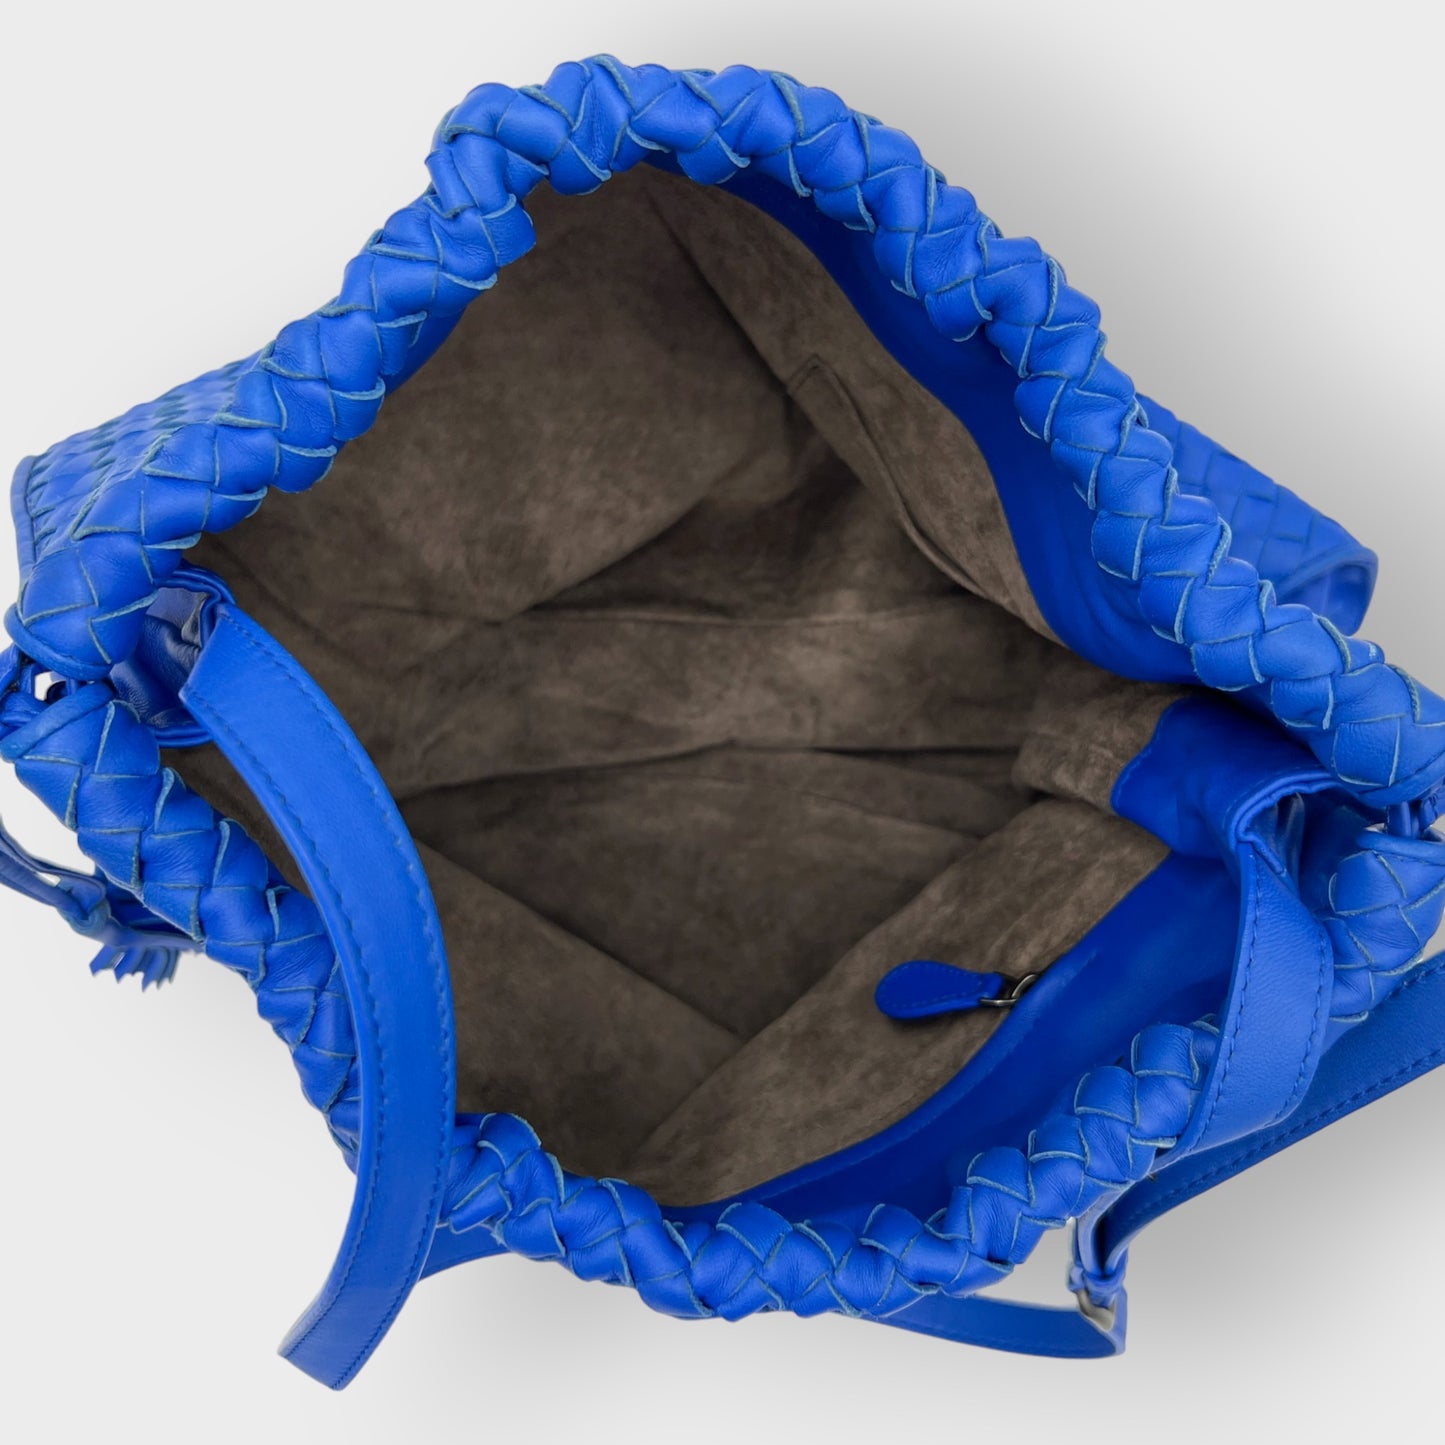 Bottega Veneta Electirc Blue Intrecciato Woven Leather Shoulder Bag